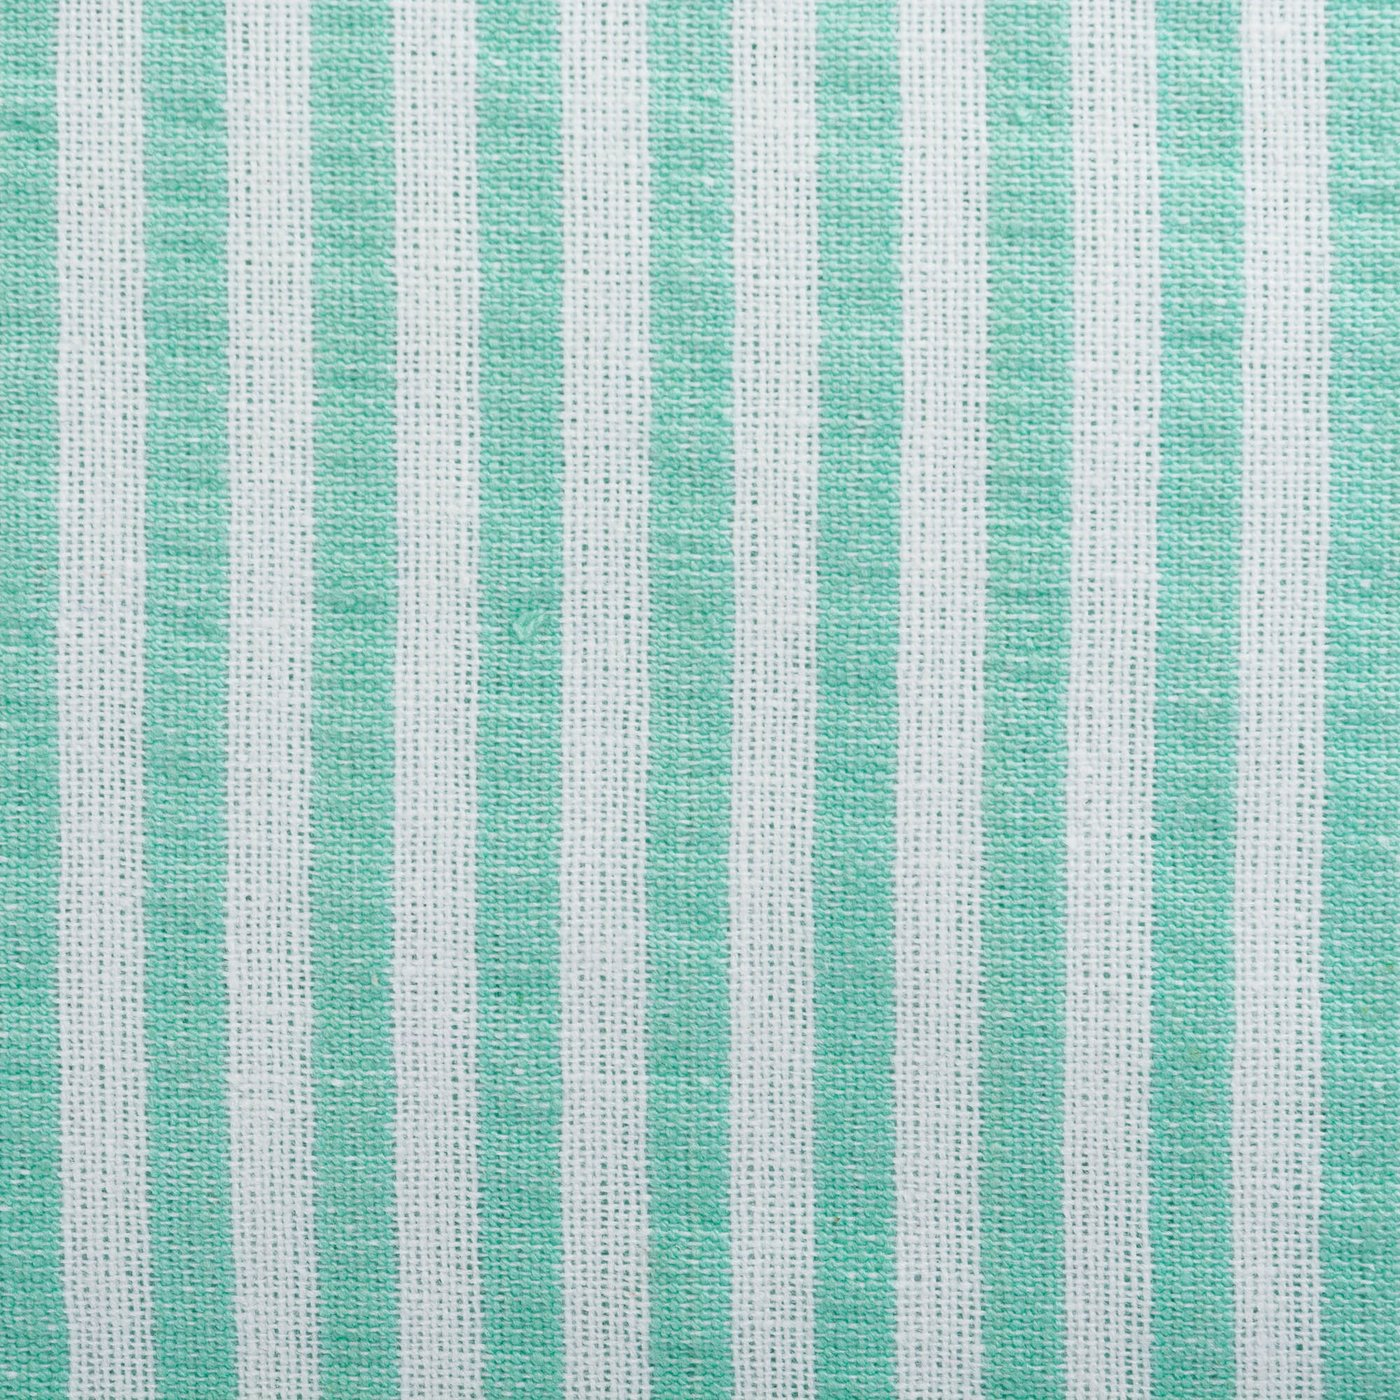 Aqua Striped Seersucker Round Tablecloth - 70 inches